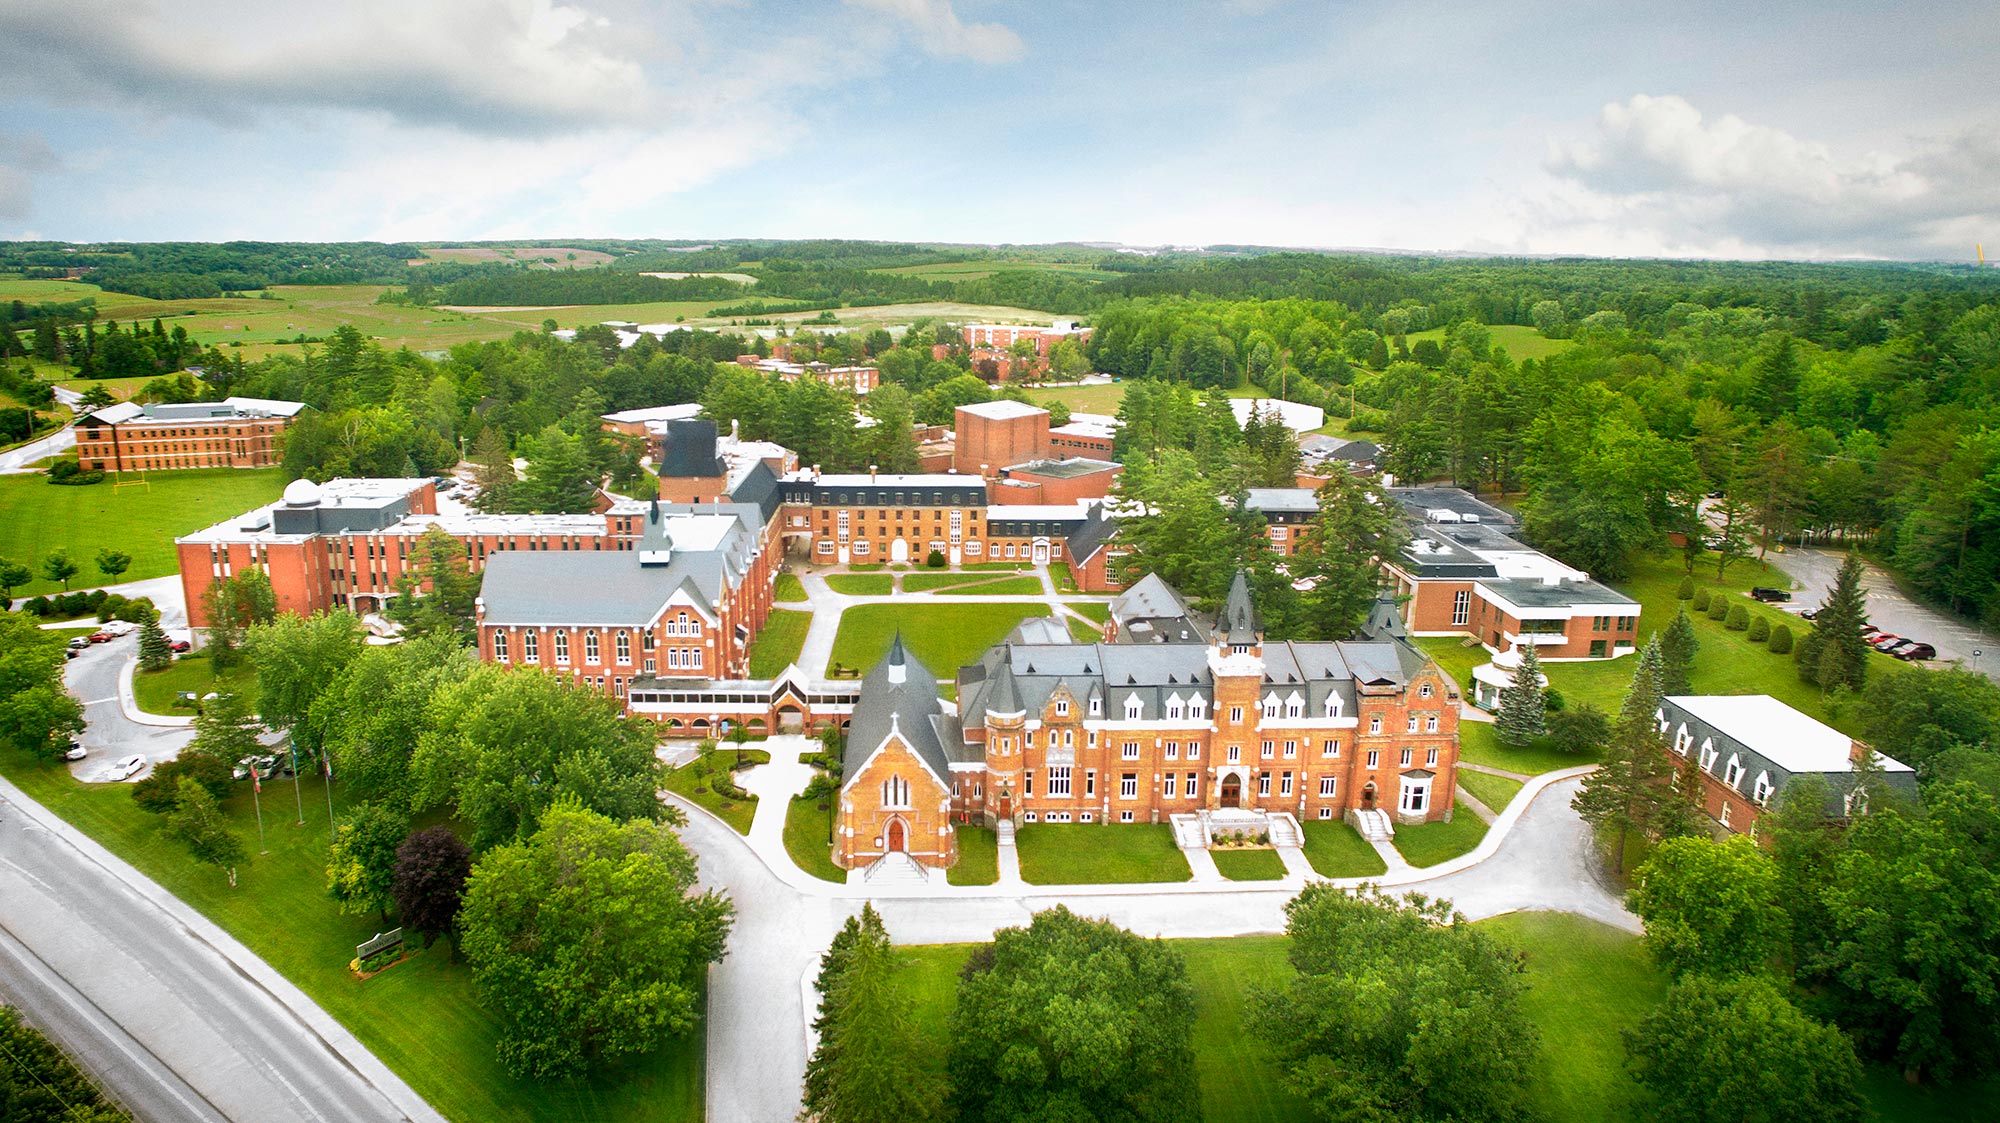 Bishop's campus